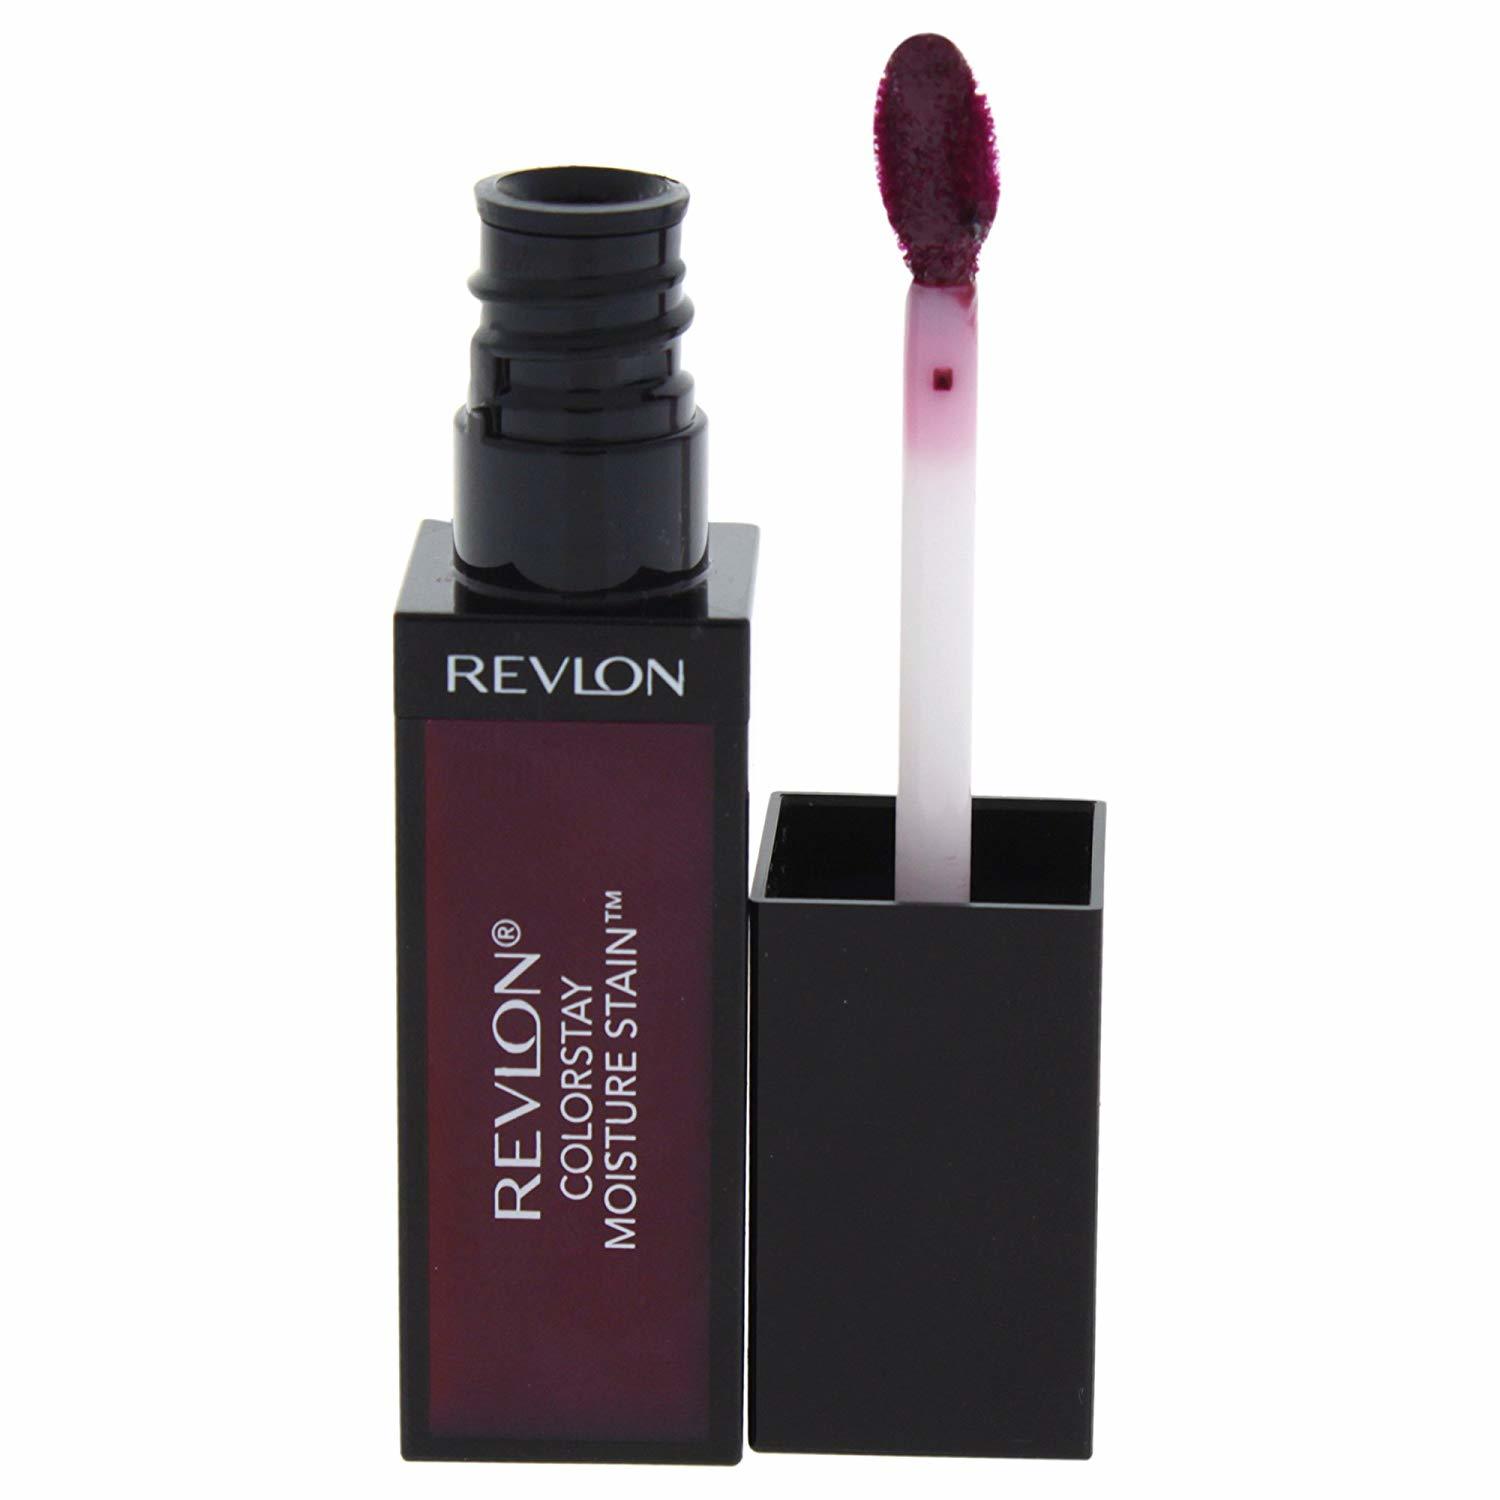 Primary image for Revlon ColorStay Moisture Stain, Parisian Passion/005, 0.27 Fluid Ounce